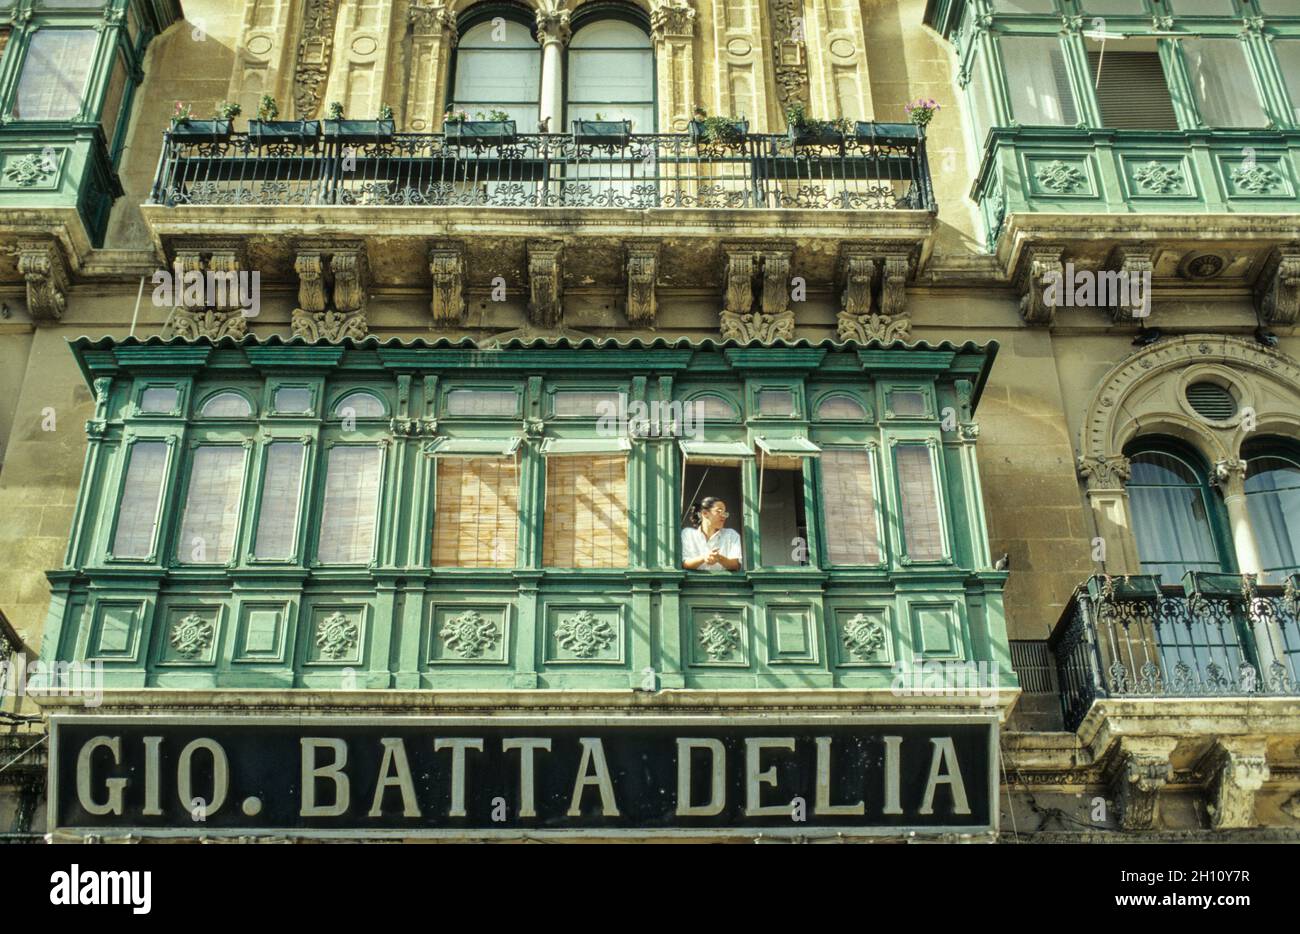 Frau am Fenster: Ein für Malta typischer Erker an einem Haus in der Altstadt von Valetta - Mujeres en la ventana: Un típico mirador de Malta en un edificio en el casco antiguo de Valetta. Foto de stock